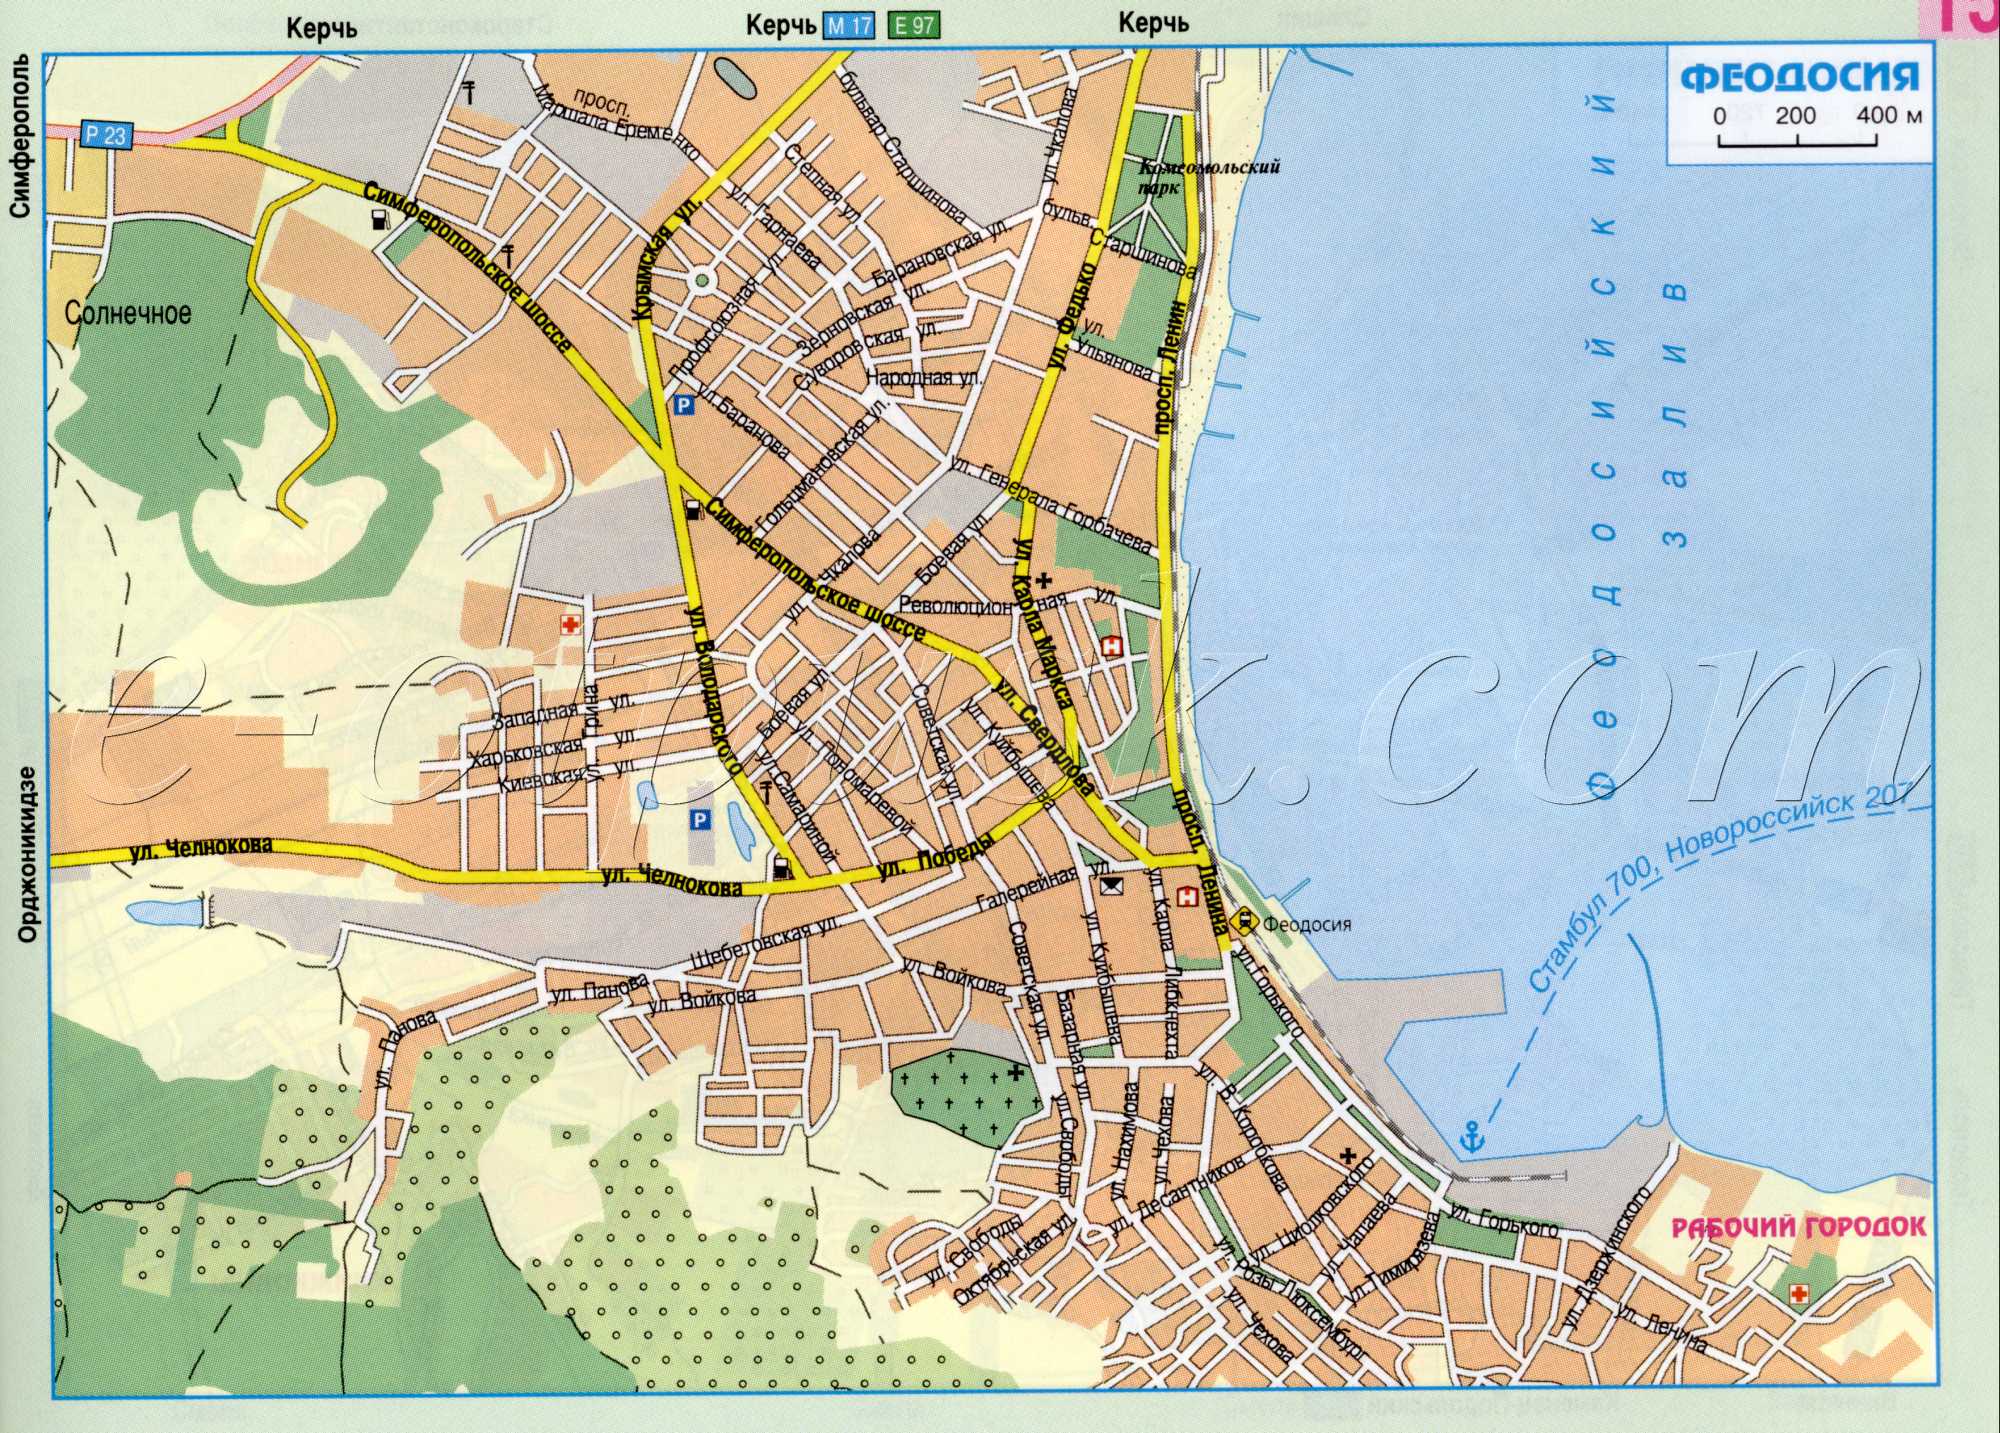 Map of Feodosiya. Major auto thoroughfares of the city Feodosia, Autonomous Republic of Crimea. download for free